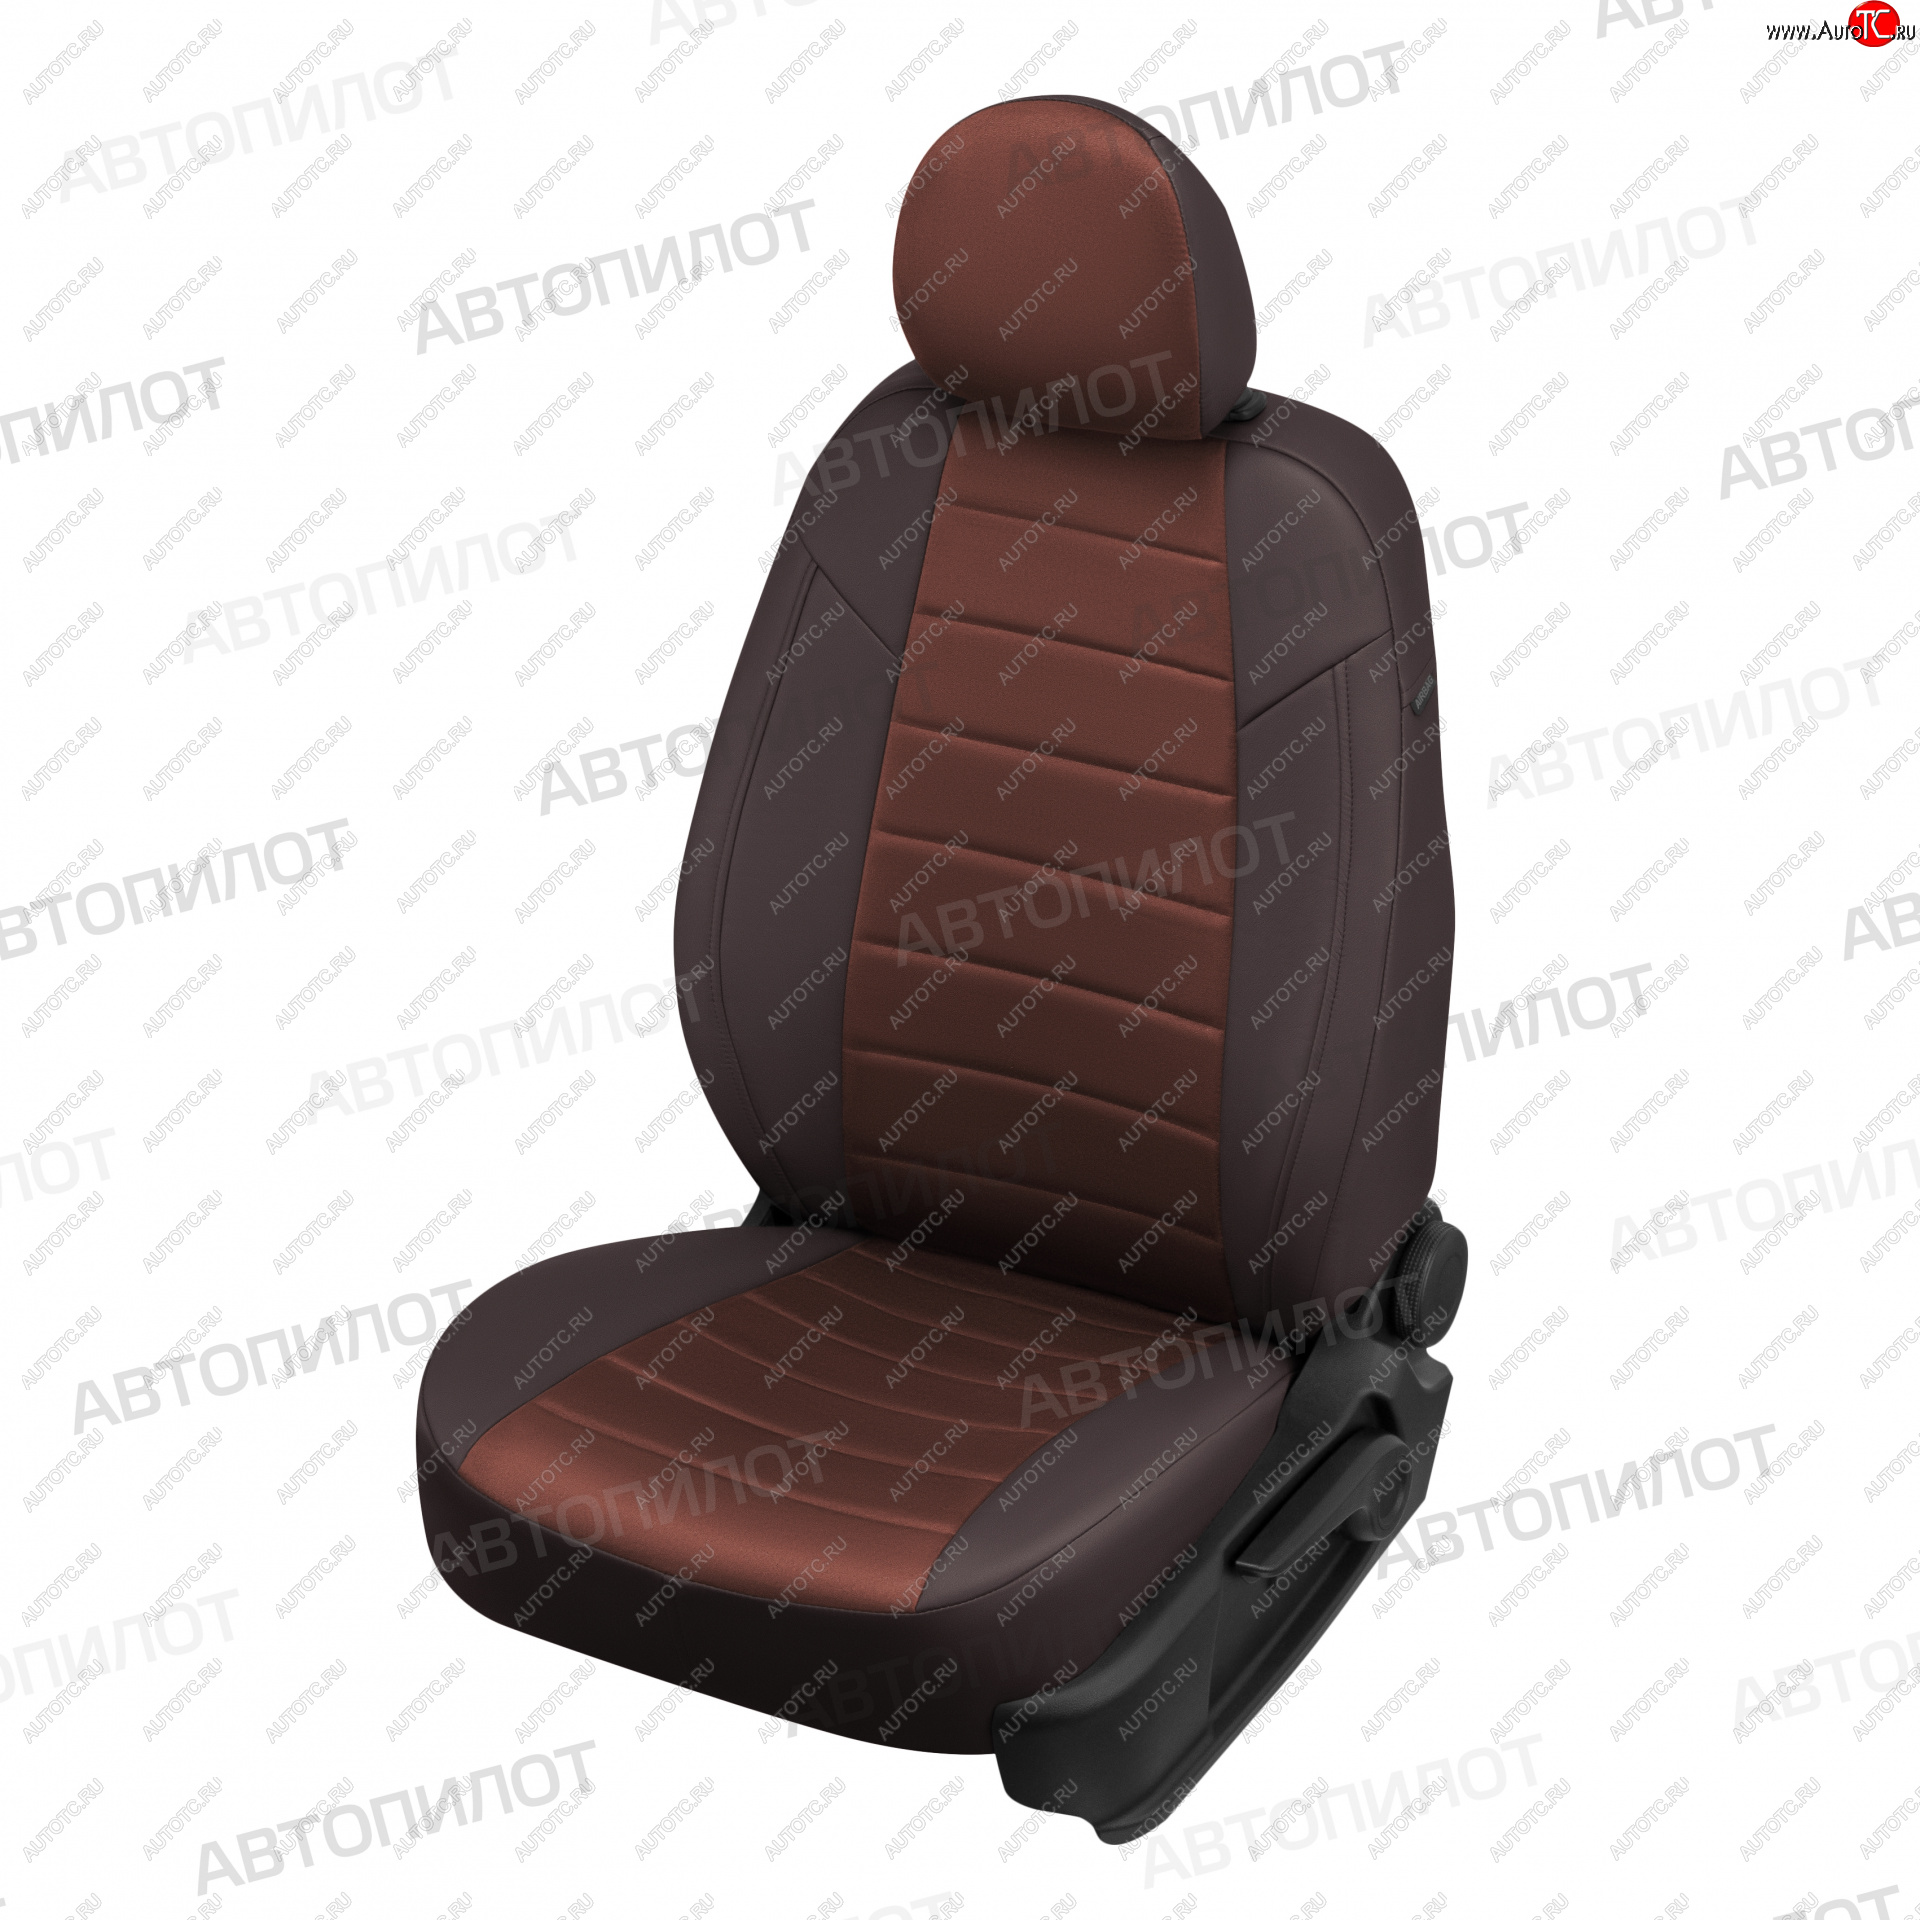 13 449 р. Чехлы сидений (экокожа/алькантара, спл./п.кресла Спорт) Автопилот  BMW 3 серия  E46 (1998-2005) (шоколад)